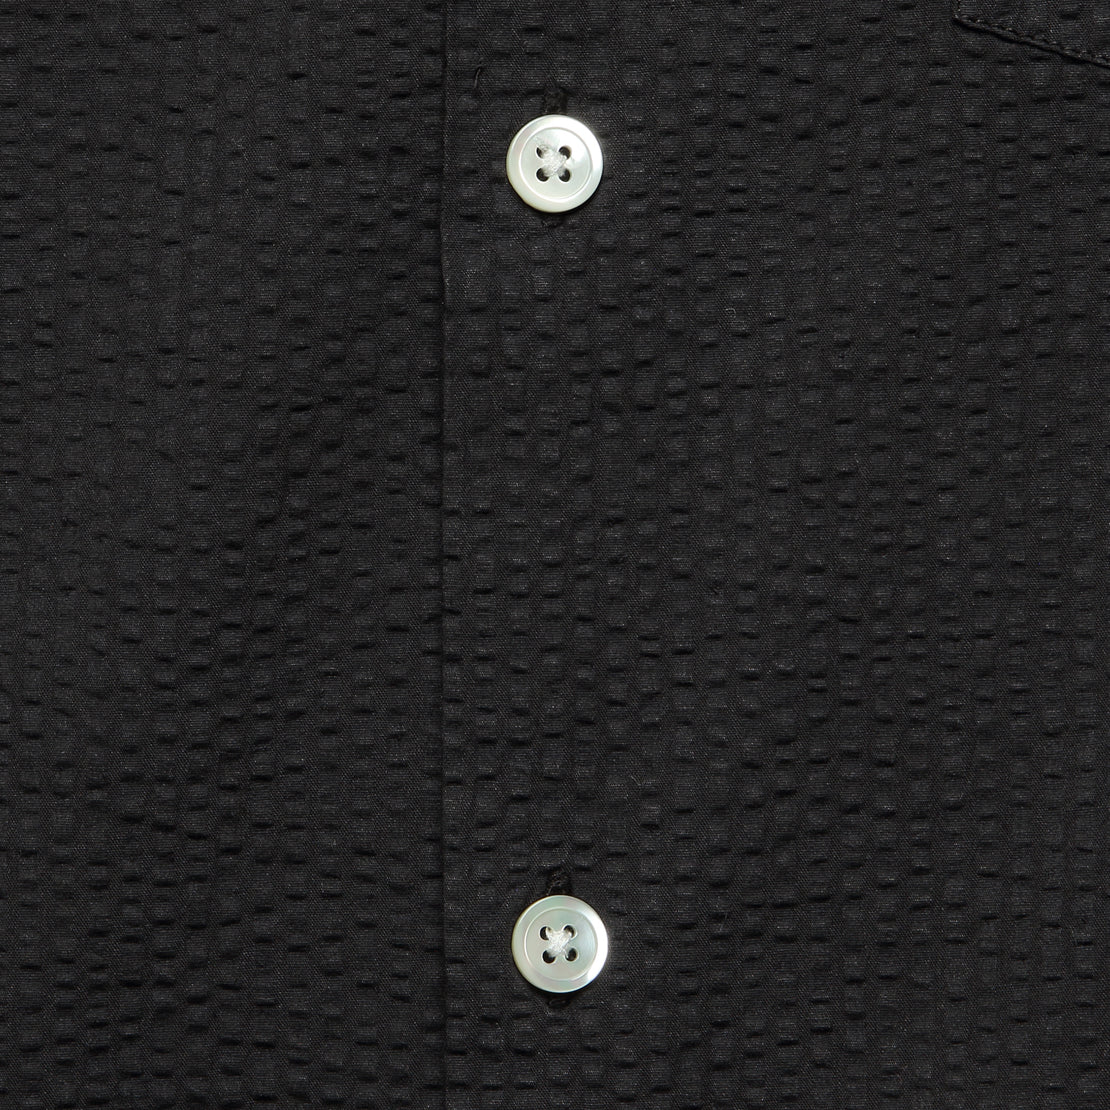 Seersucker Camp Shirt - Black - Portuguese Flannel - STAG Provisions - Tops - S/S Woven - Seersucker